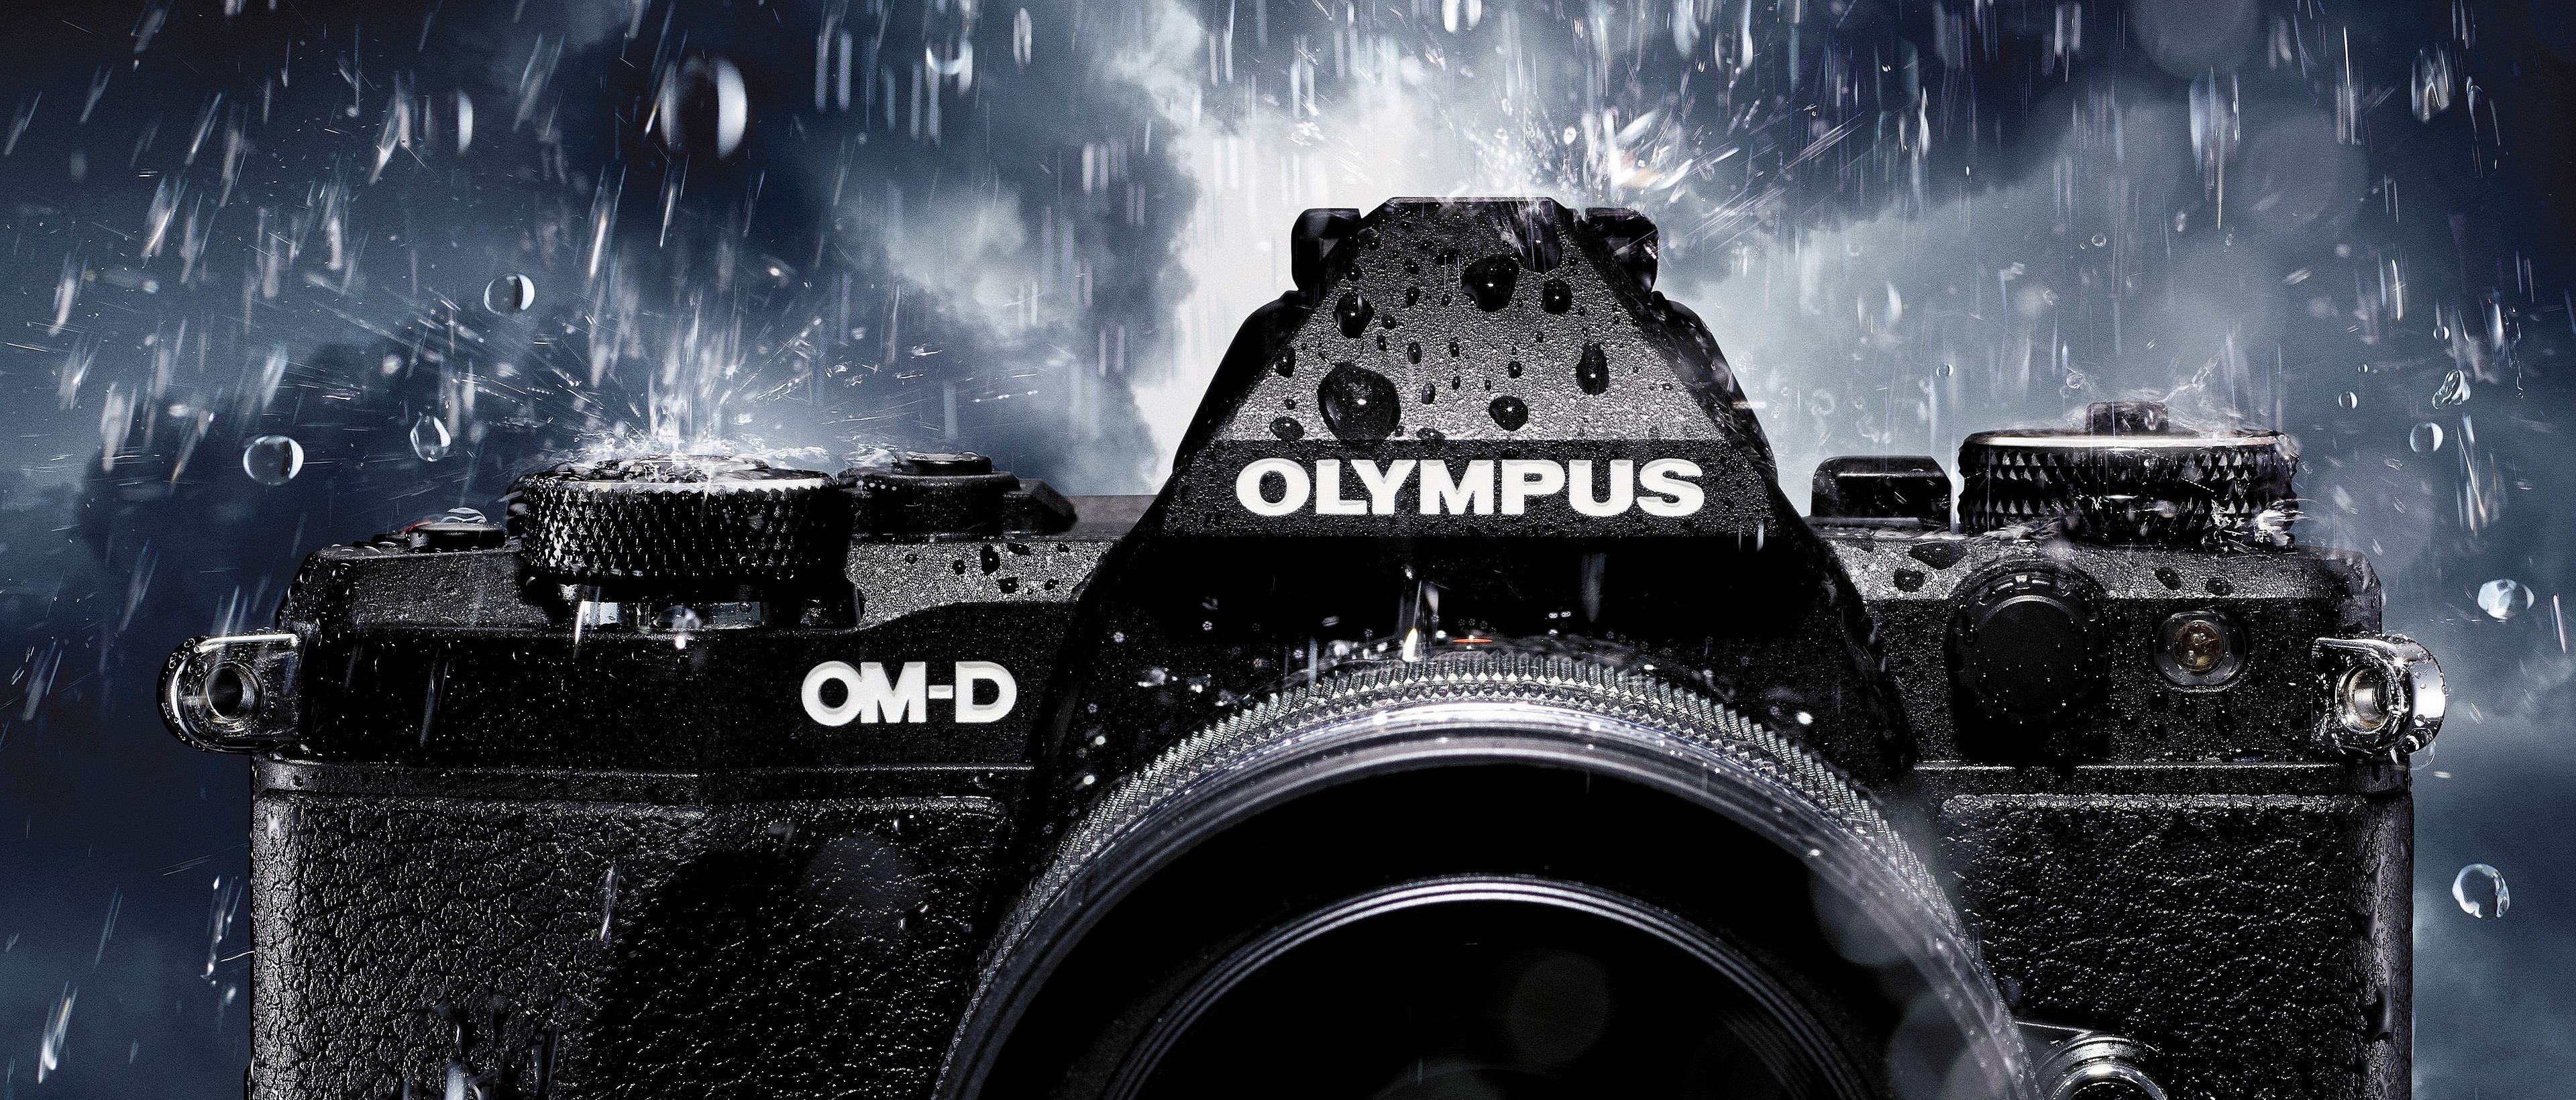 Background: Post Thumbnail: Olympus